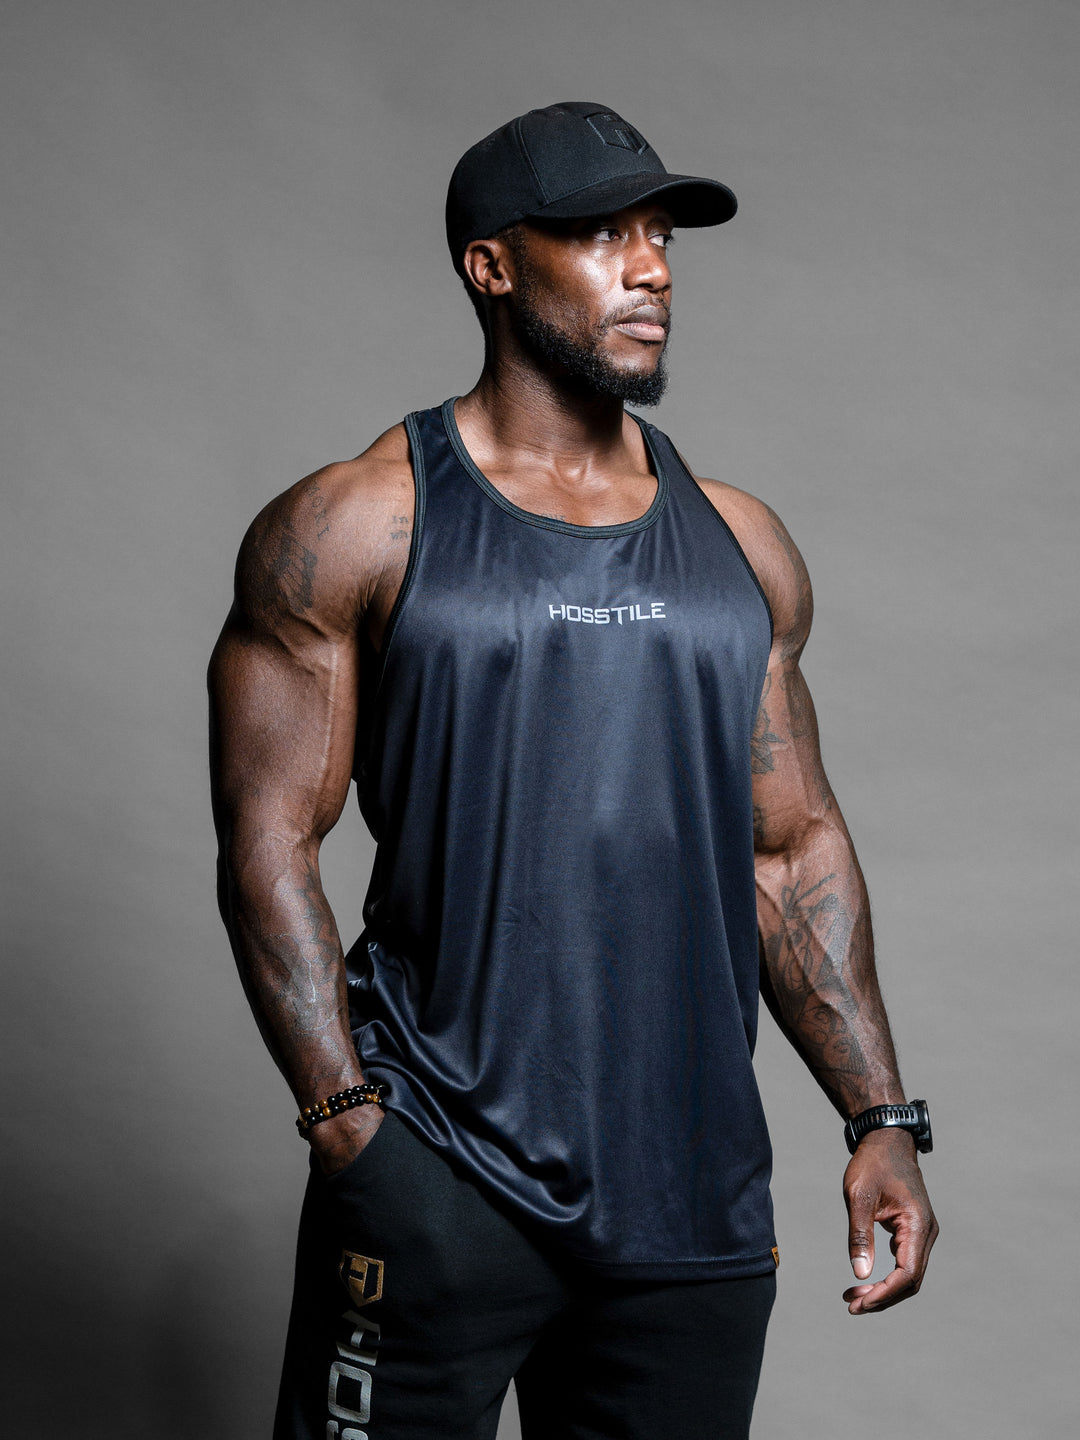 Men's Muscle T-shirts, Workout Shirts for Men